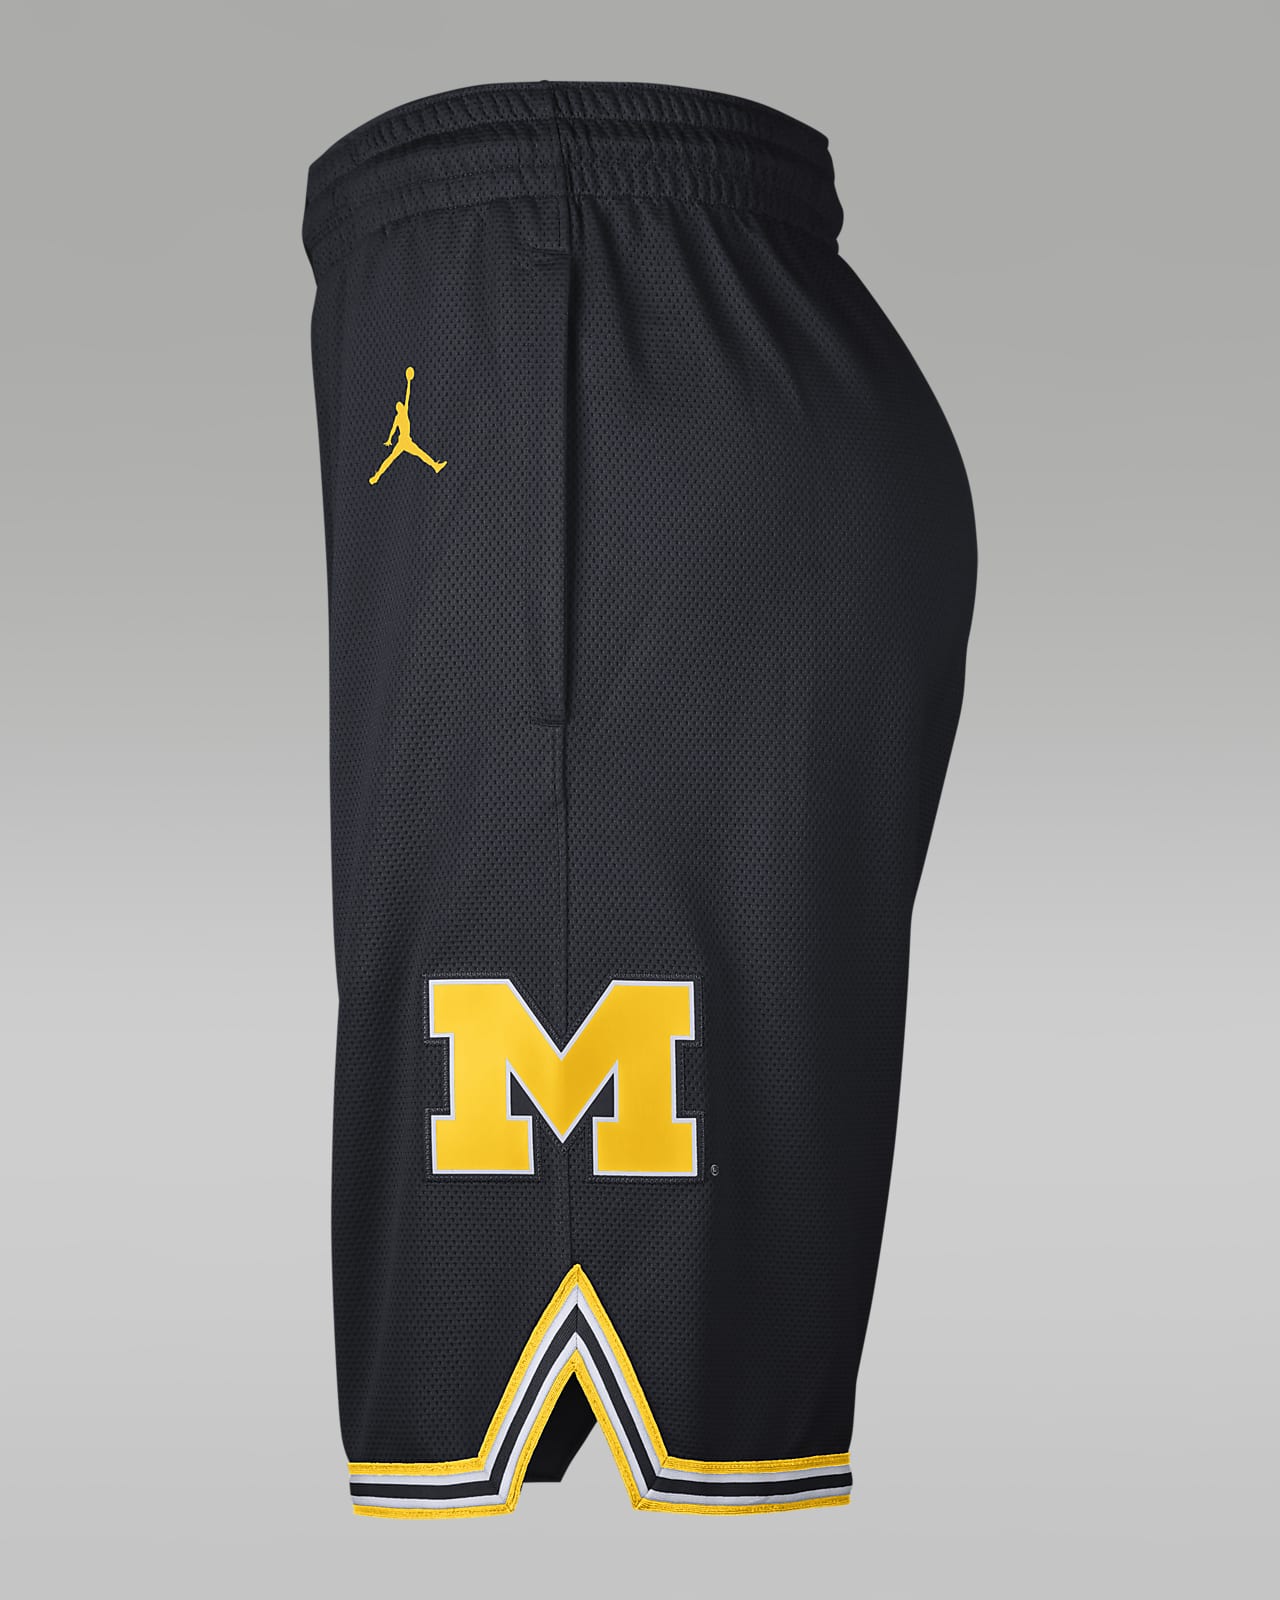 Jordan College (Michigan) Men's Replica Basketball Shorts.